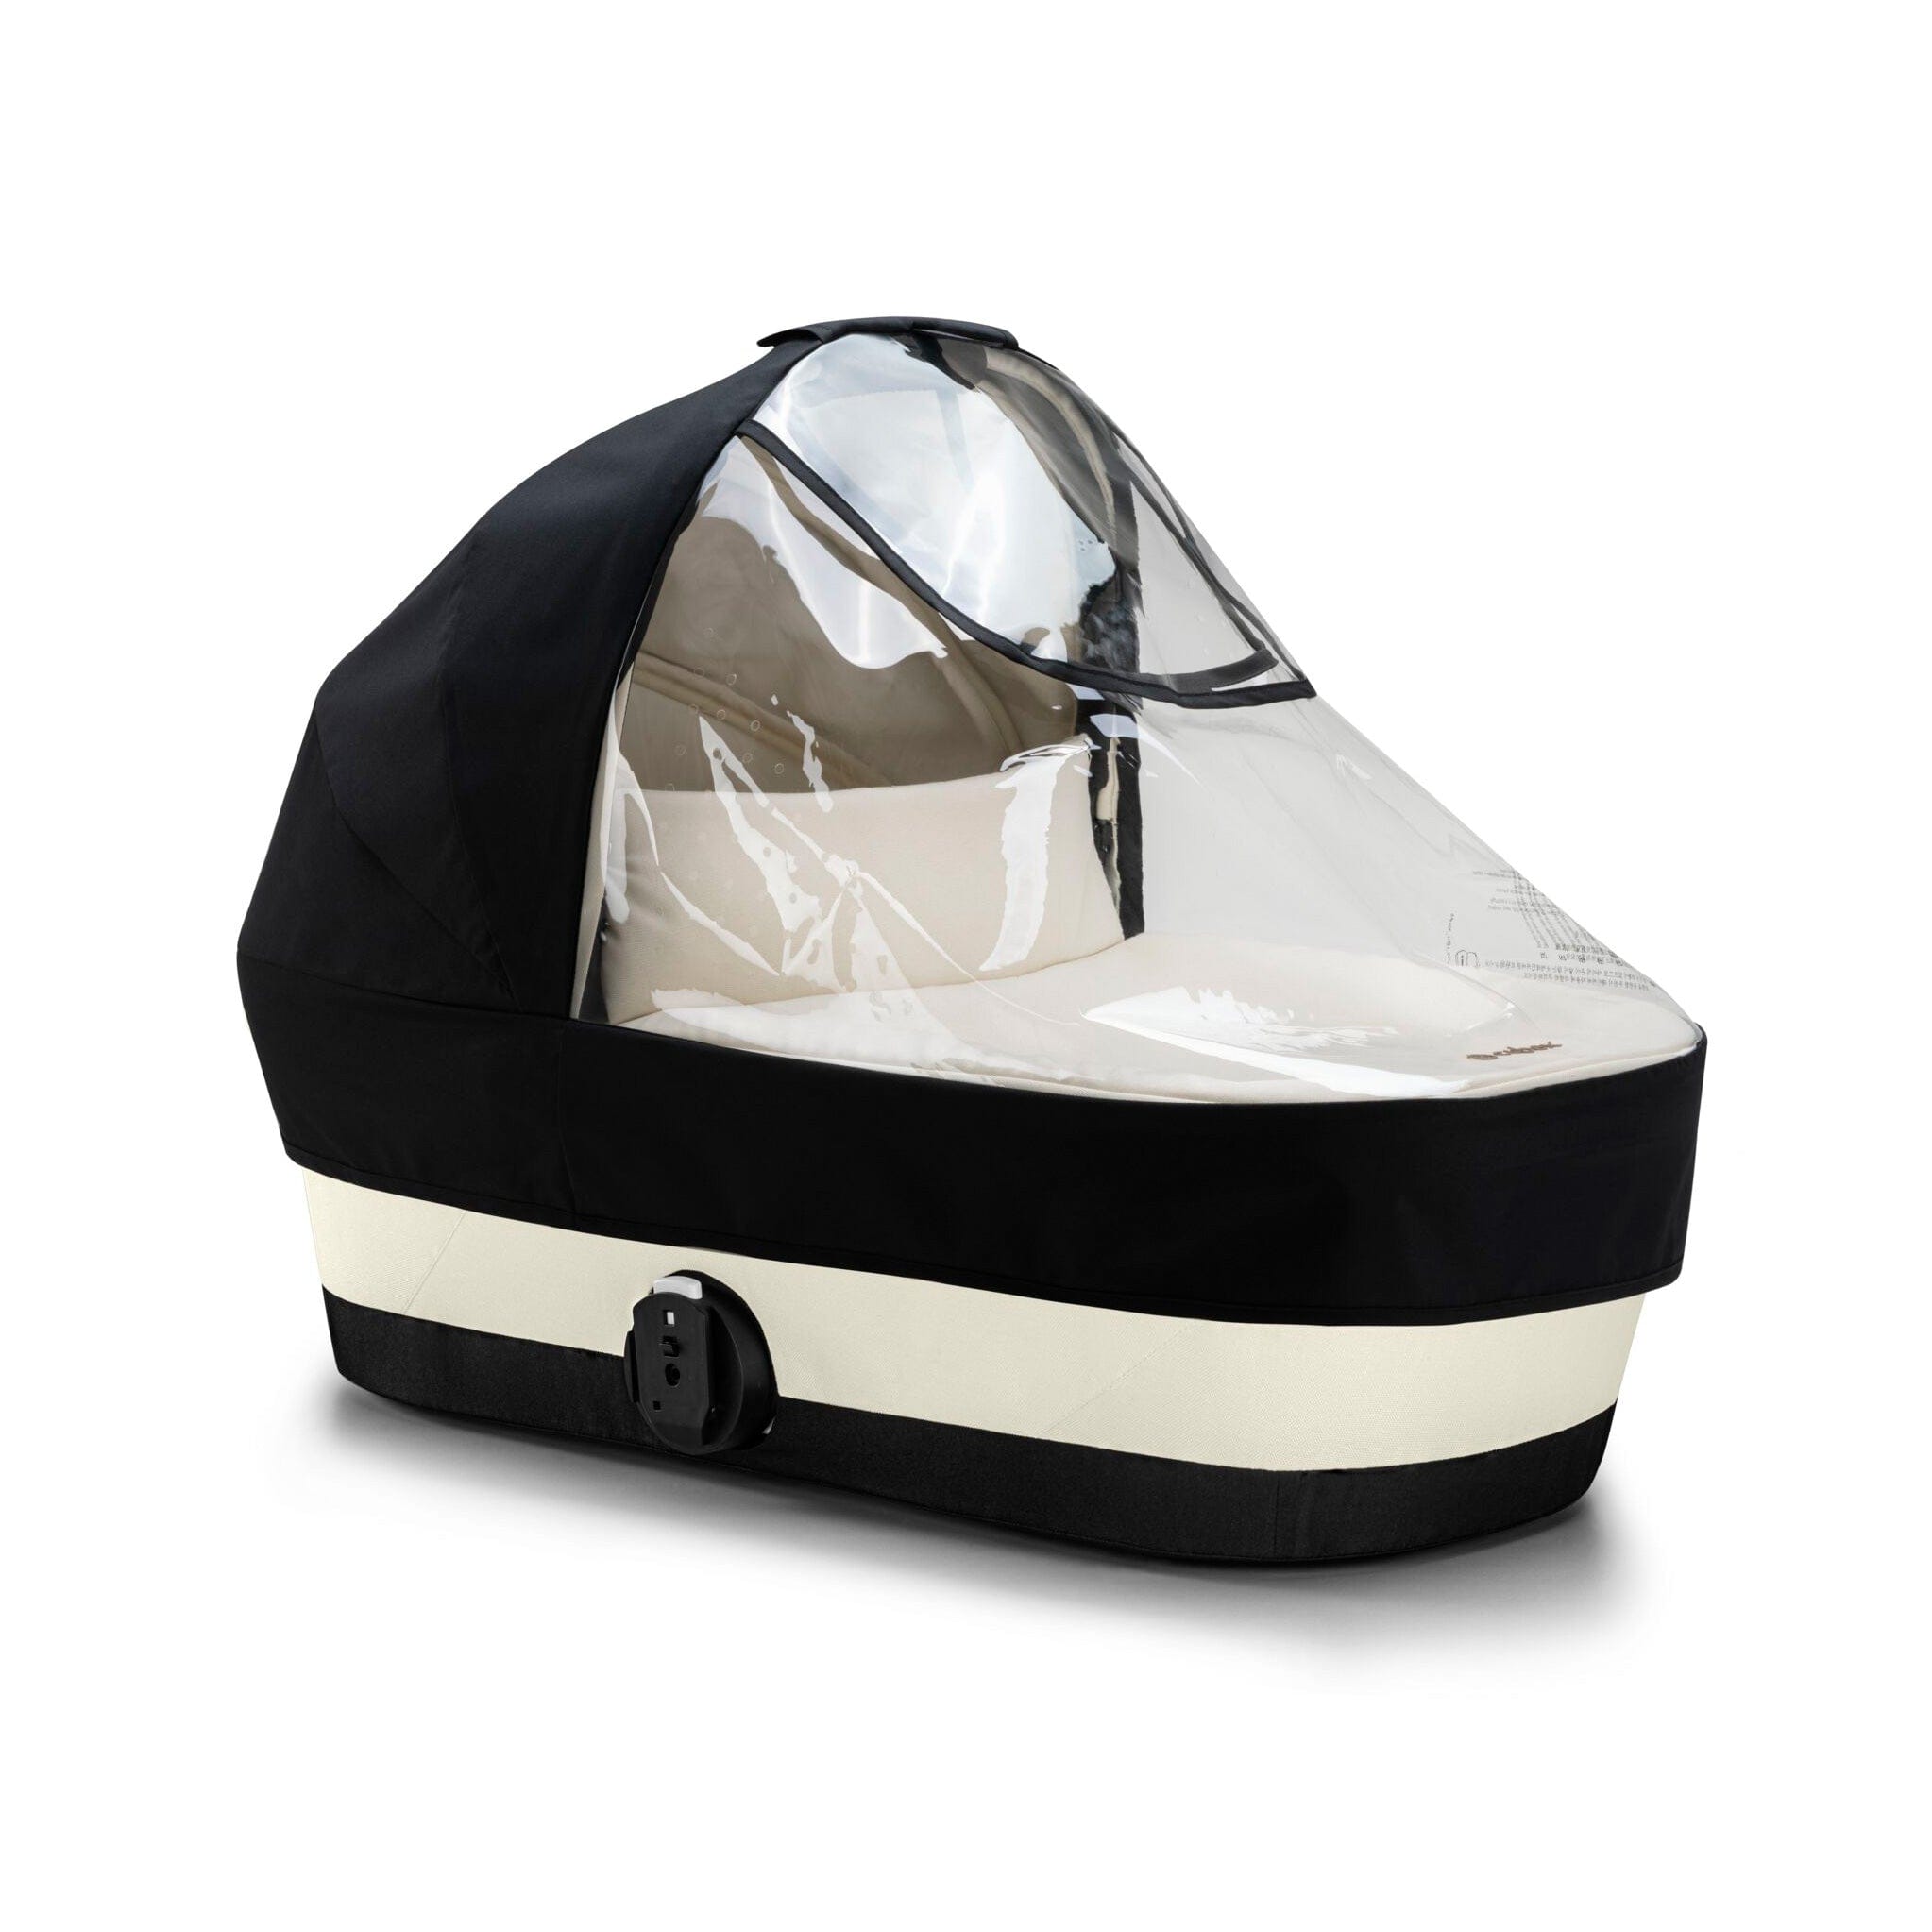 Cybex Gazelle S Comfort Bundle in Black/Moon Black Baby Prams 12768-BLK-MOO-BLK 4063846324859